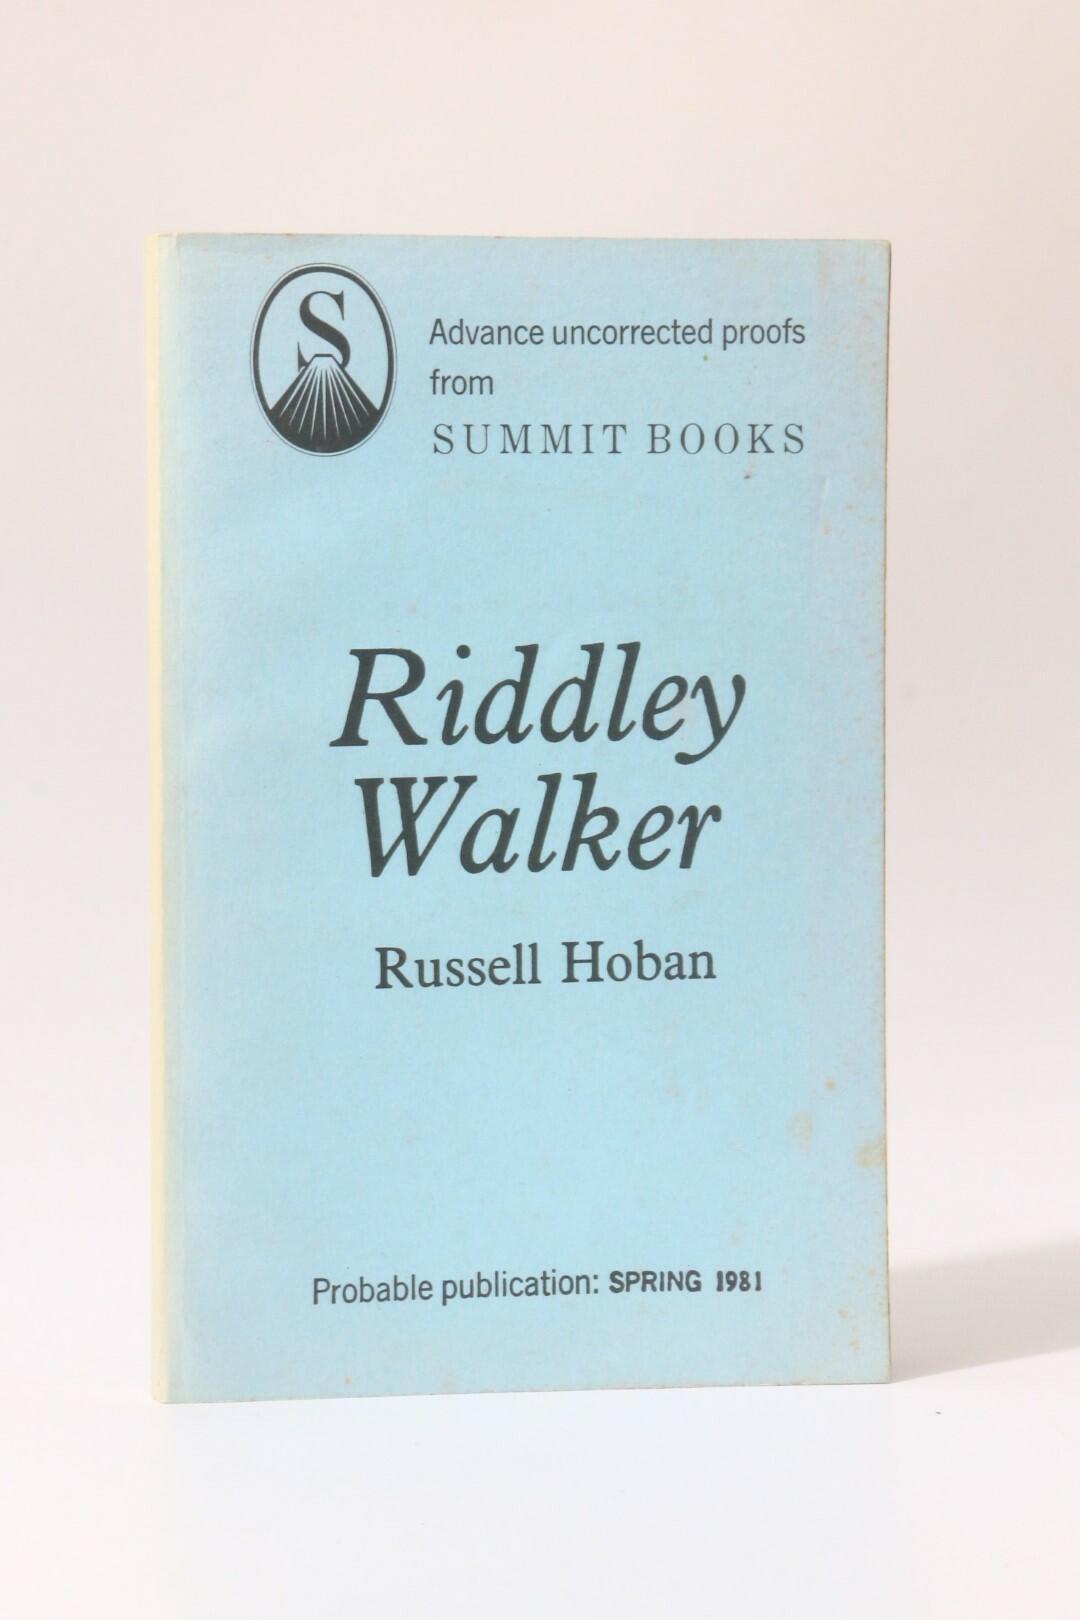 Russell Hoban - Riddley Walker - Summit Books, 1981, Proof.